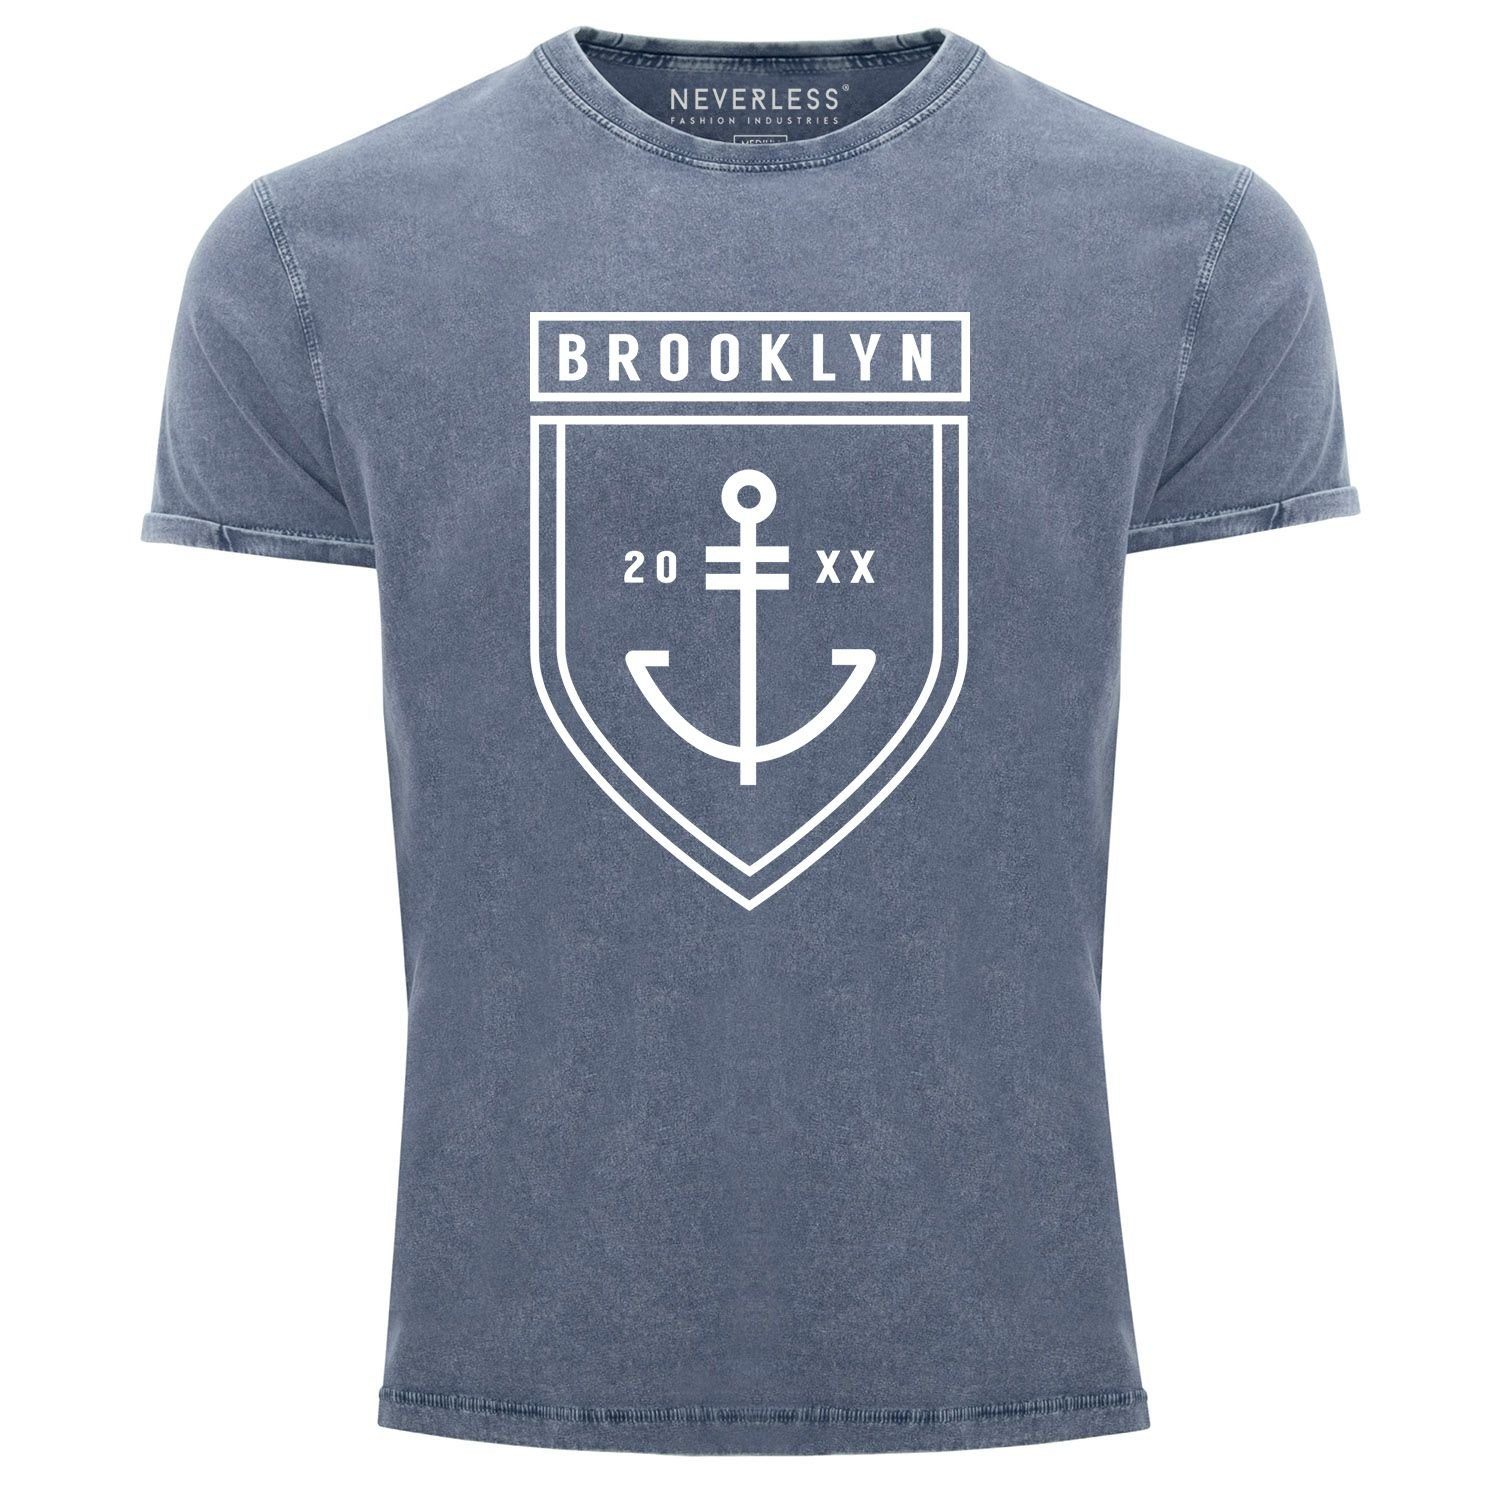 Neverless Print-Shirt Cooles Angesagtes Herren T-Shirt Vintage Shirt Brooklyn Anker Aufdruck Used Look Slim Fit Neverless® mit Print blau | T-Shirts